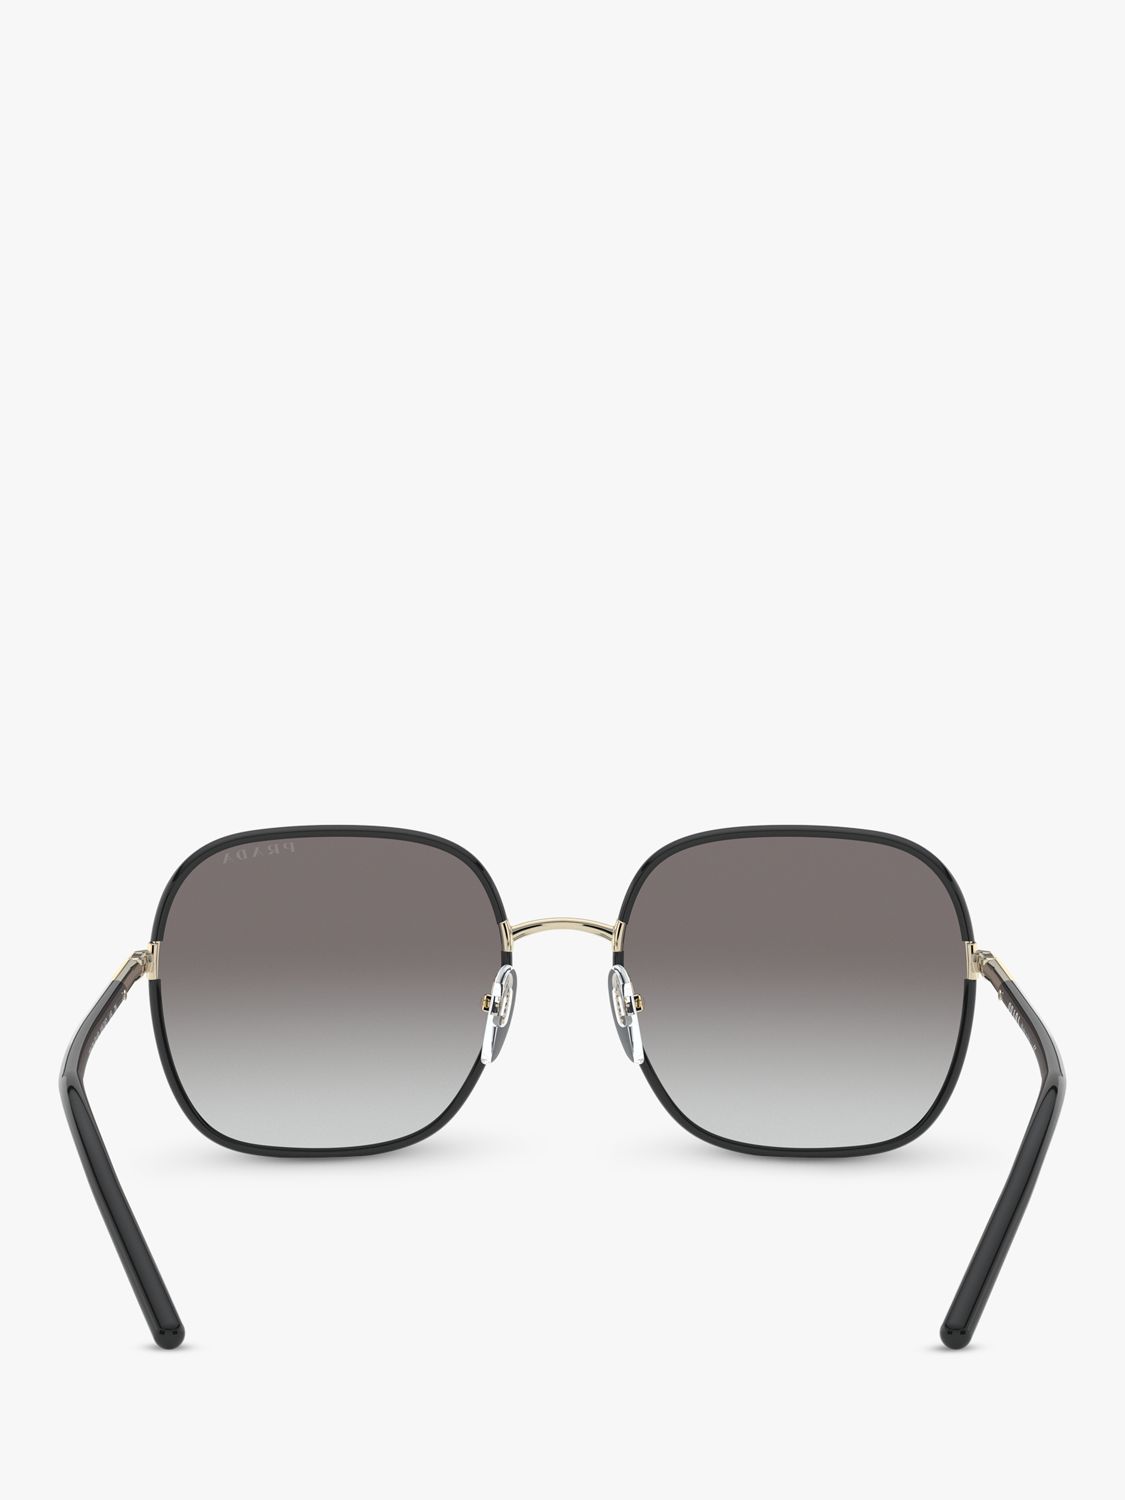 Prada PR 67XS Women's Square Sunglasses